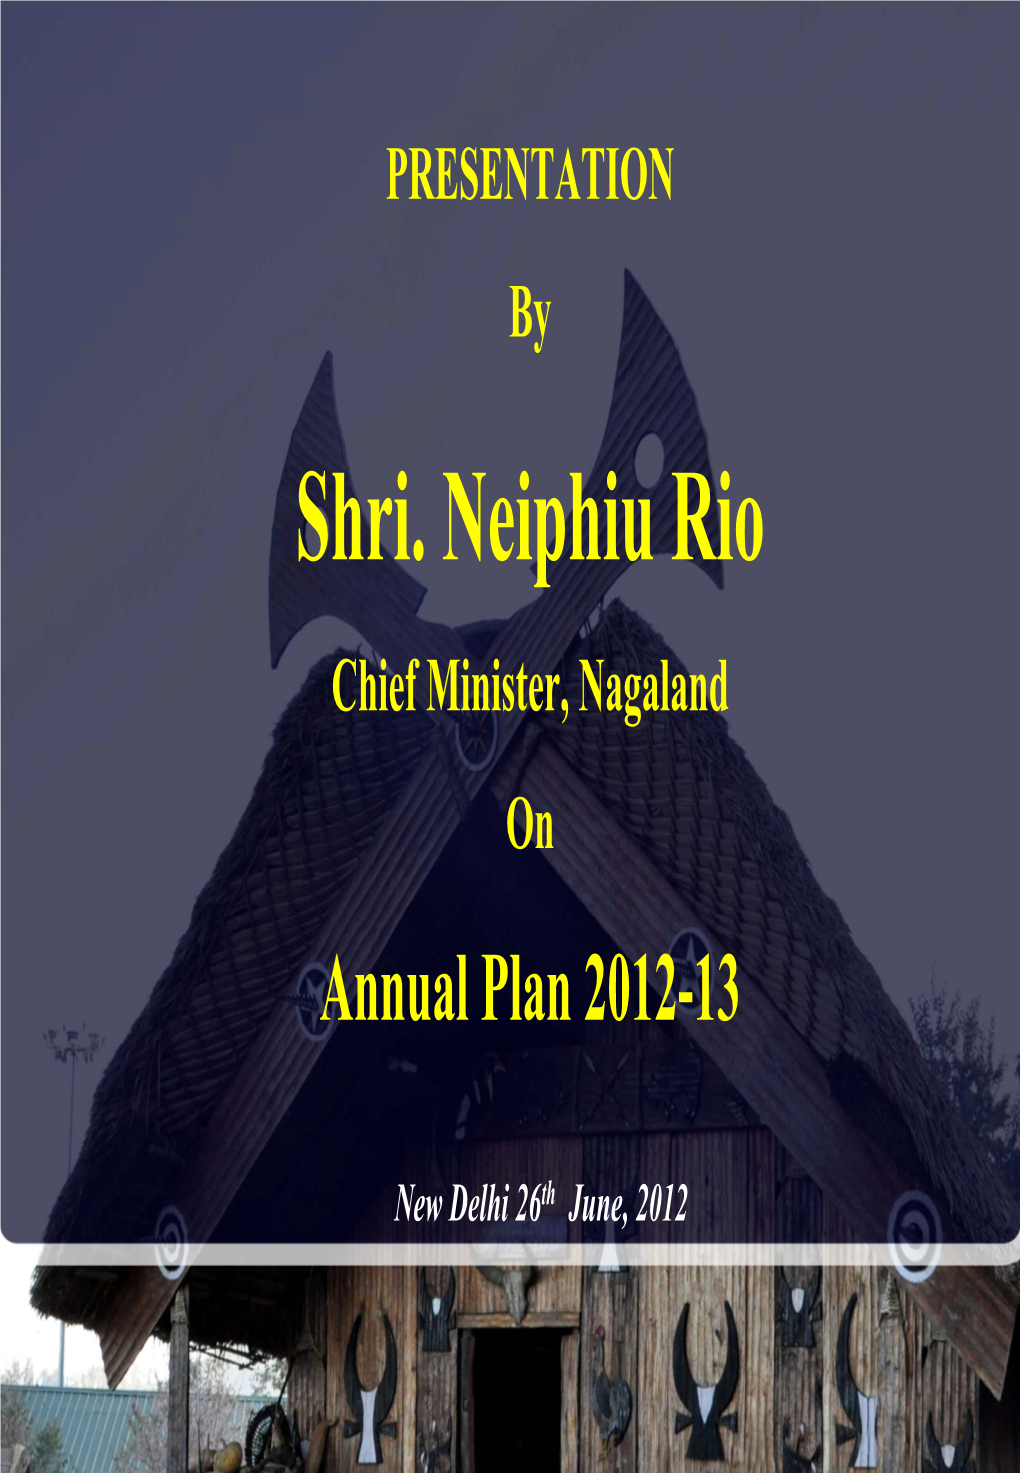 Shri. Neiphiu Rio Chief Minister, Nagaland on Annual Plan 2012-13